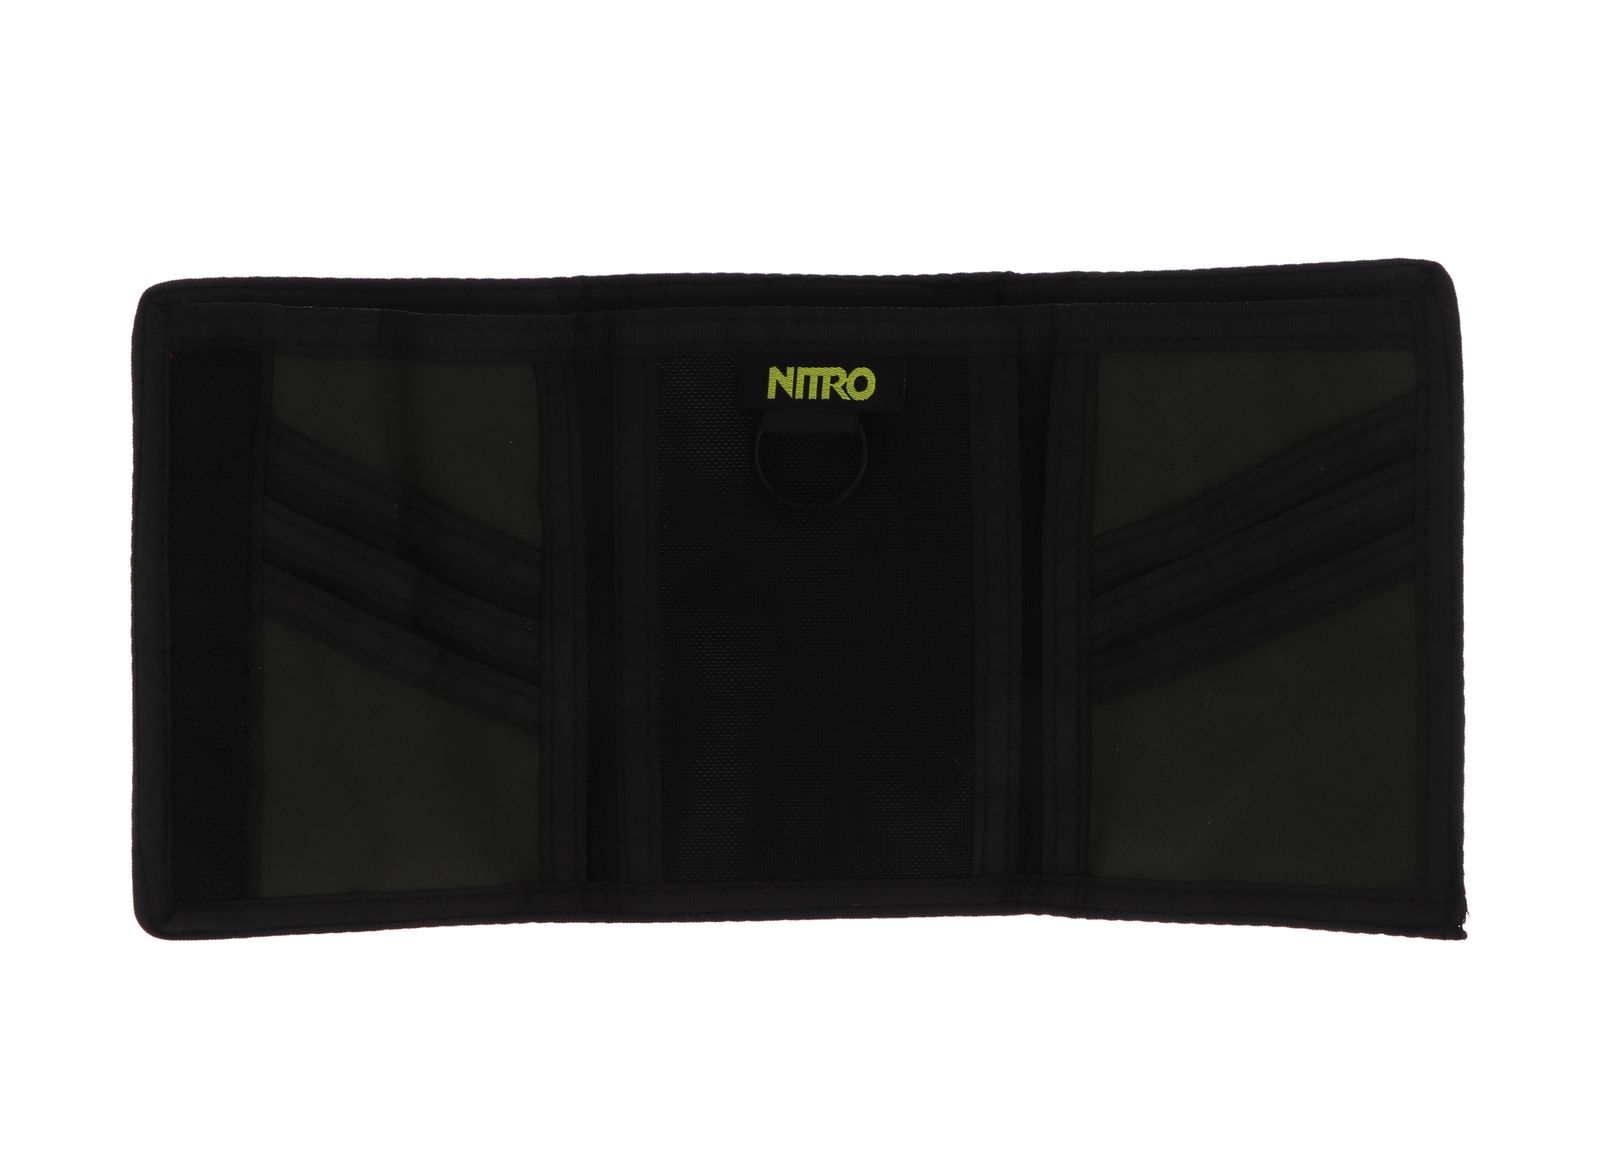 Daypacker Rosin Collection NITRO modeherz Wallet |